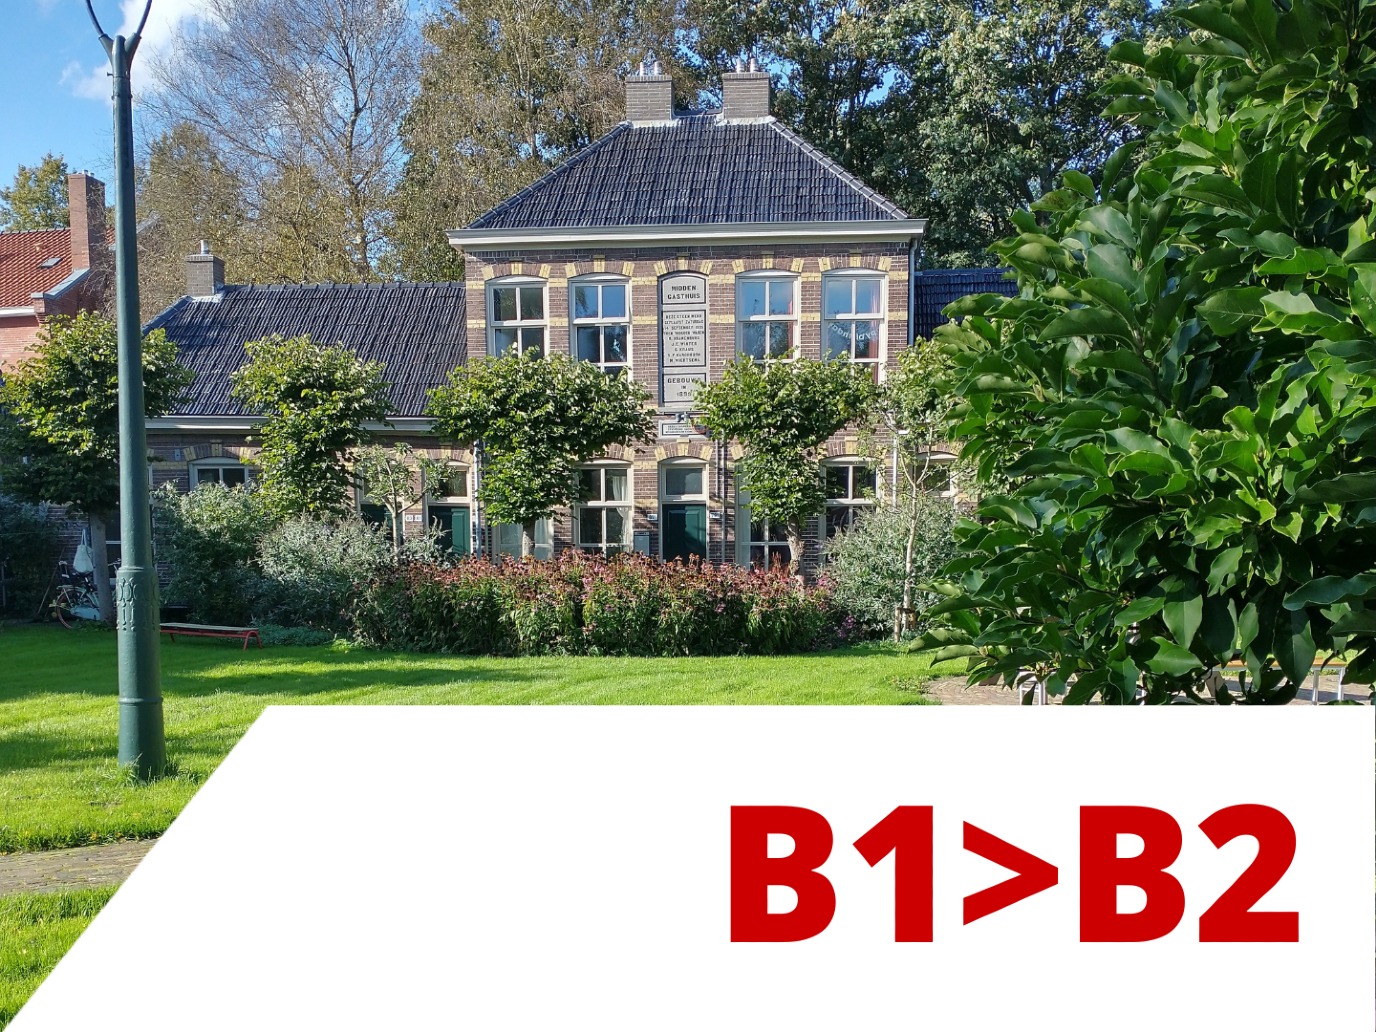 Nederlands B1>B2 voor RUG-medewerkers